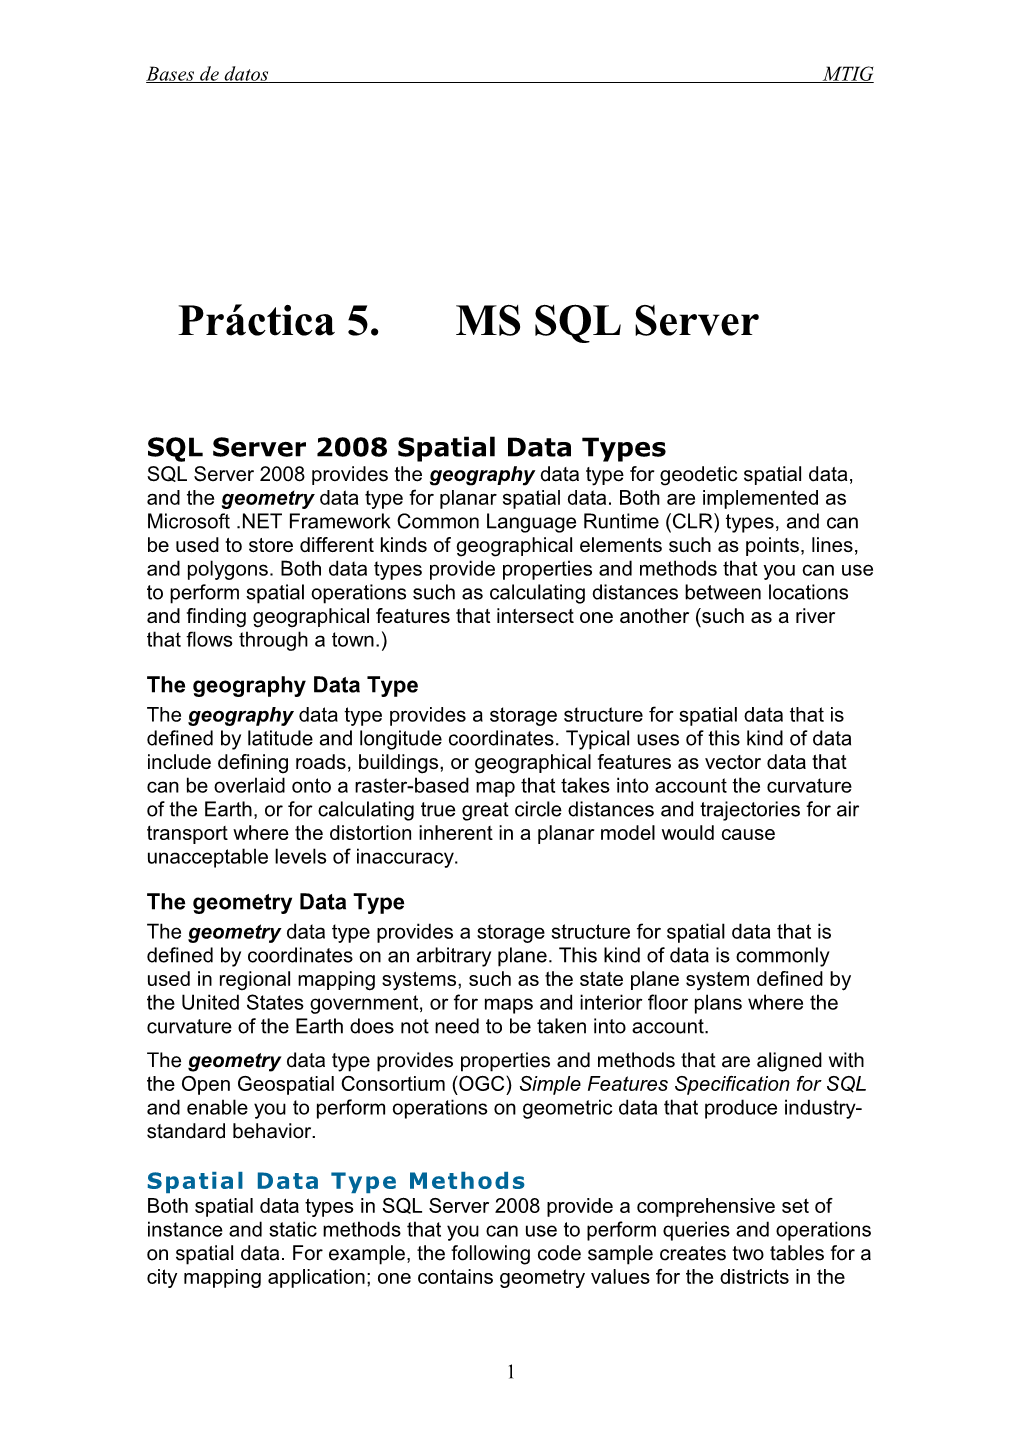 SQL Server 2008 Spatial Data Types